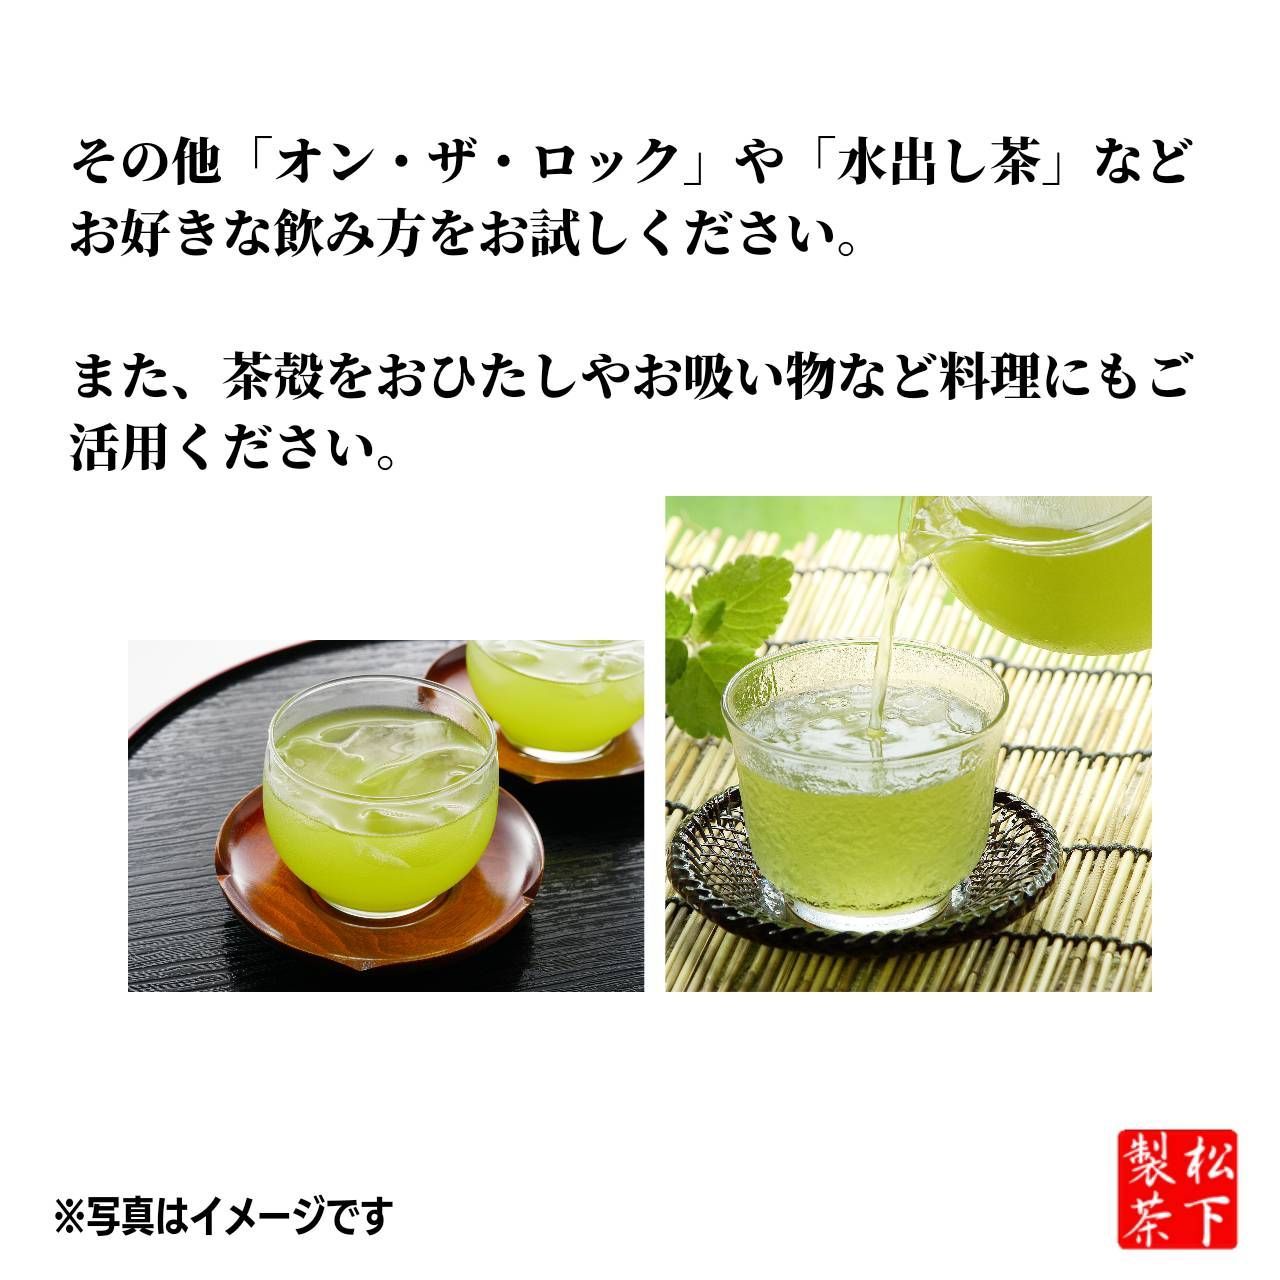 【2022年産/希少品種】種子島の有機緑茶『松寿』 茶葉(リーフ) 100g-8